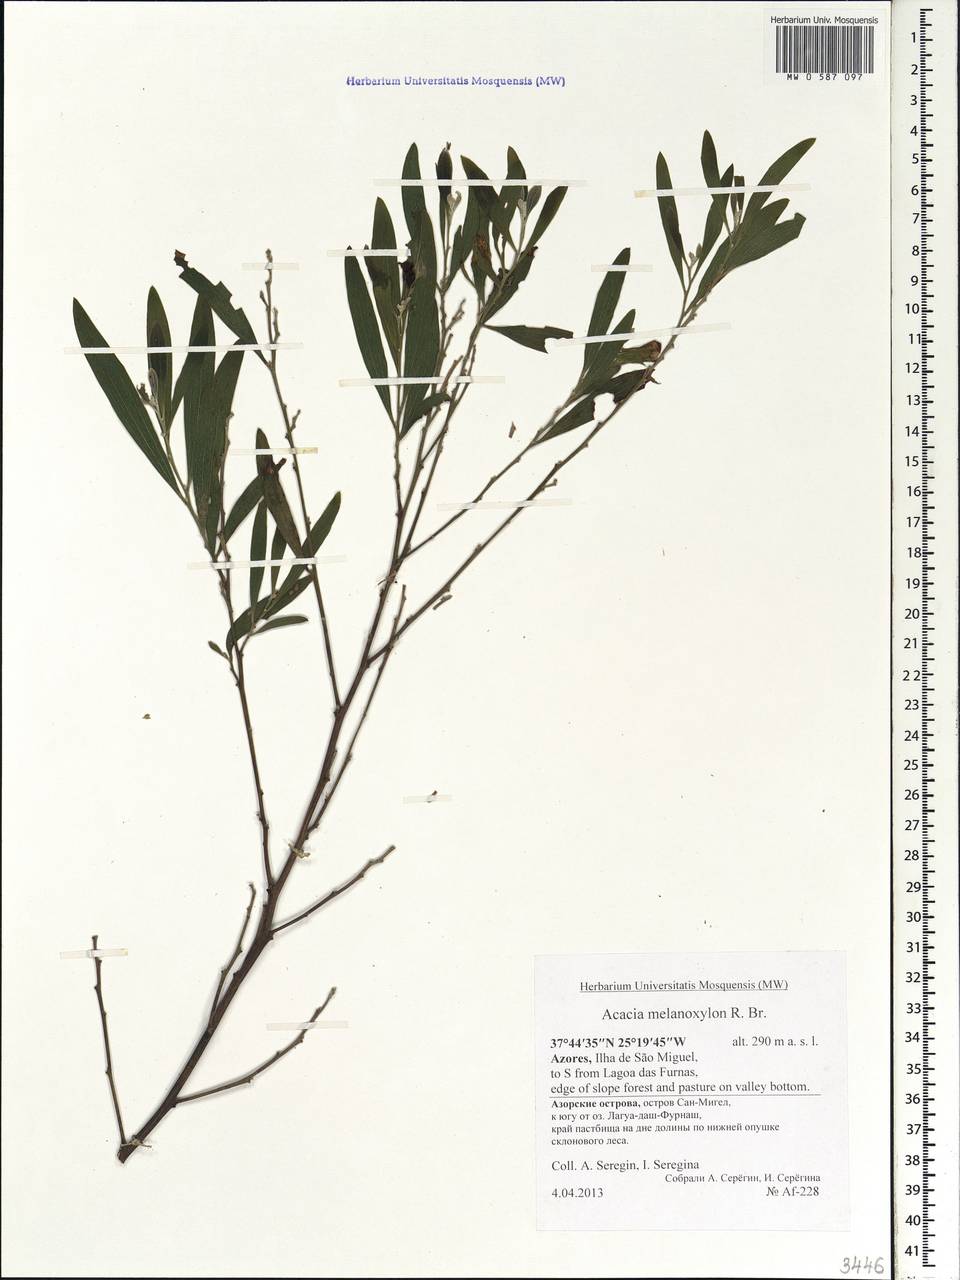 Acacia melanoxylon R.Br., Africa (AFR) (Portugal)